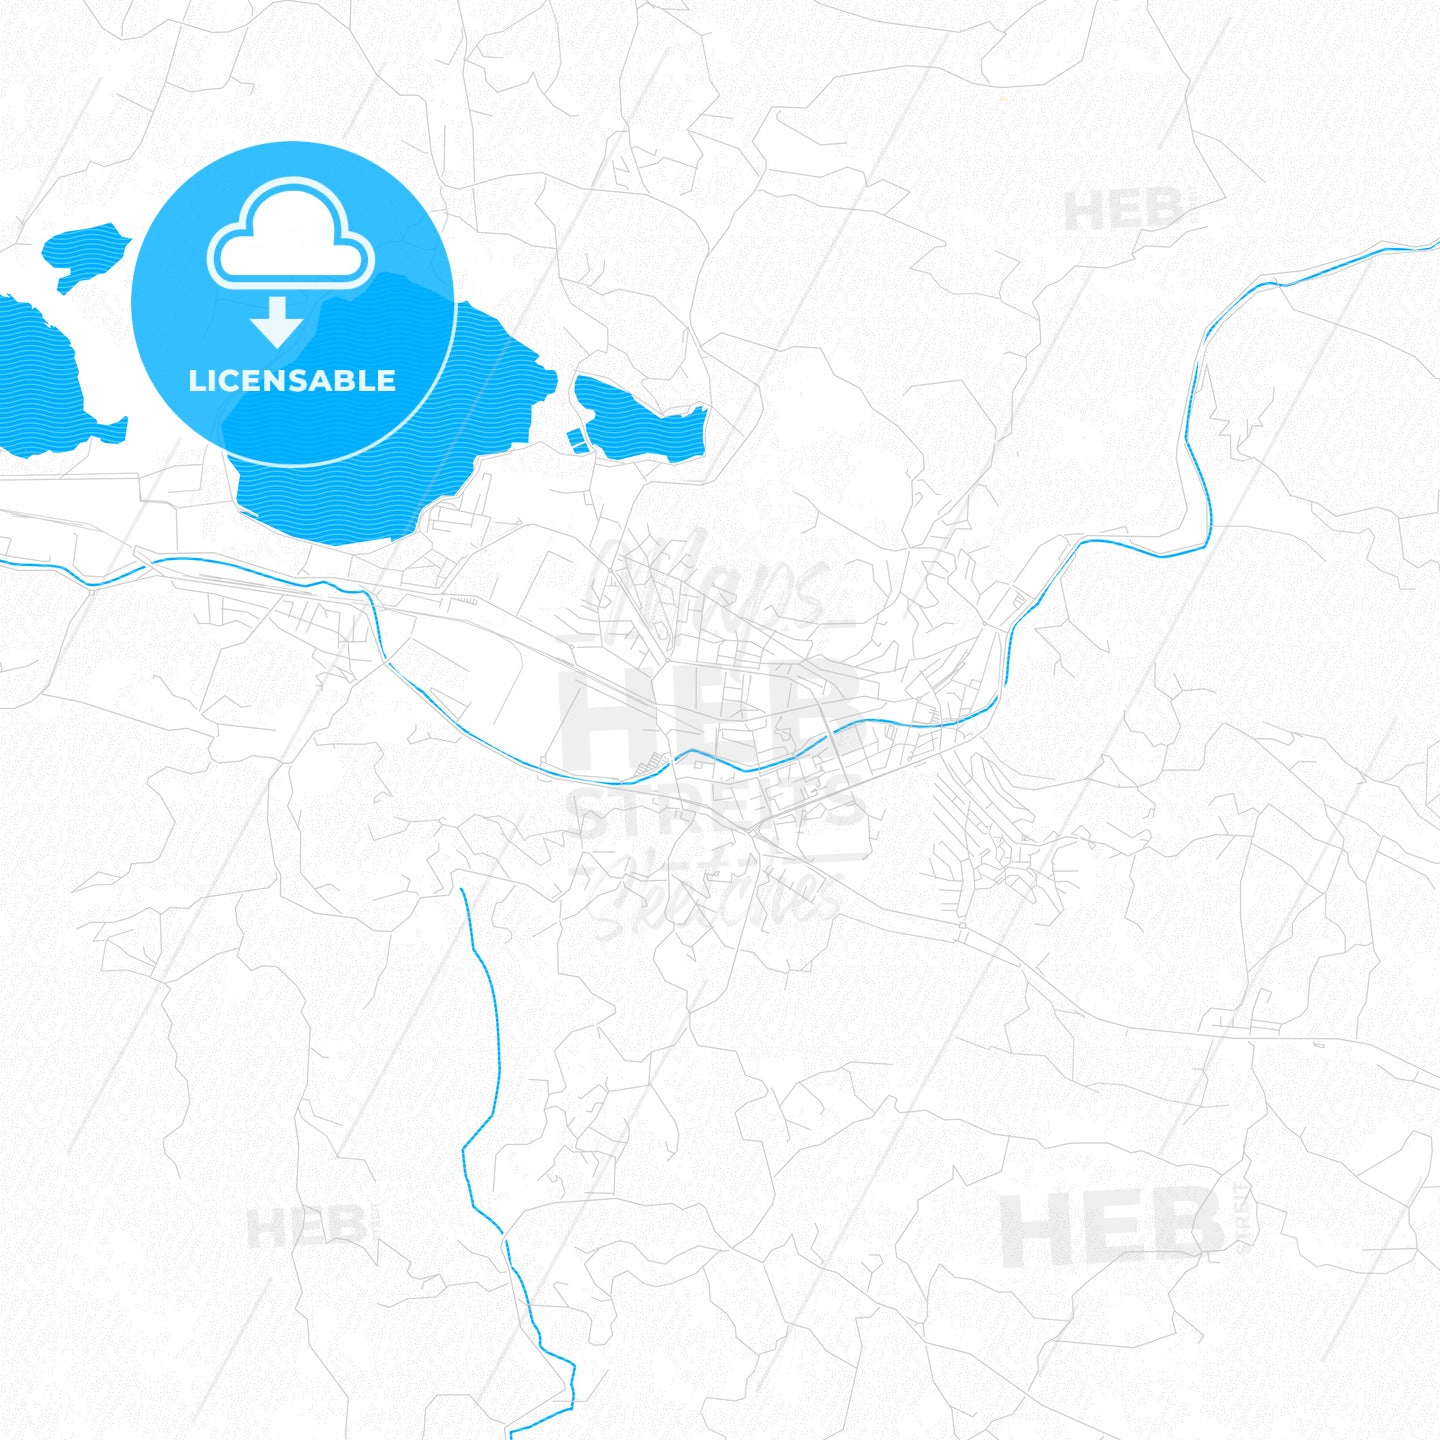 Velenje, Slovenia PDF vector map with water in focus